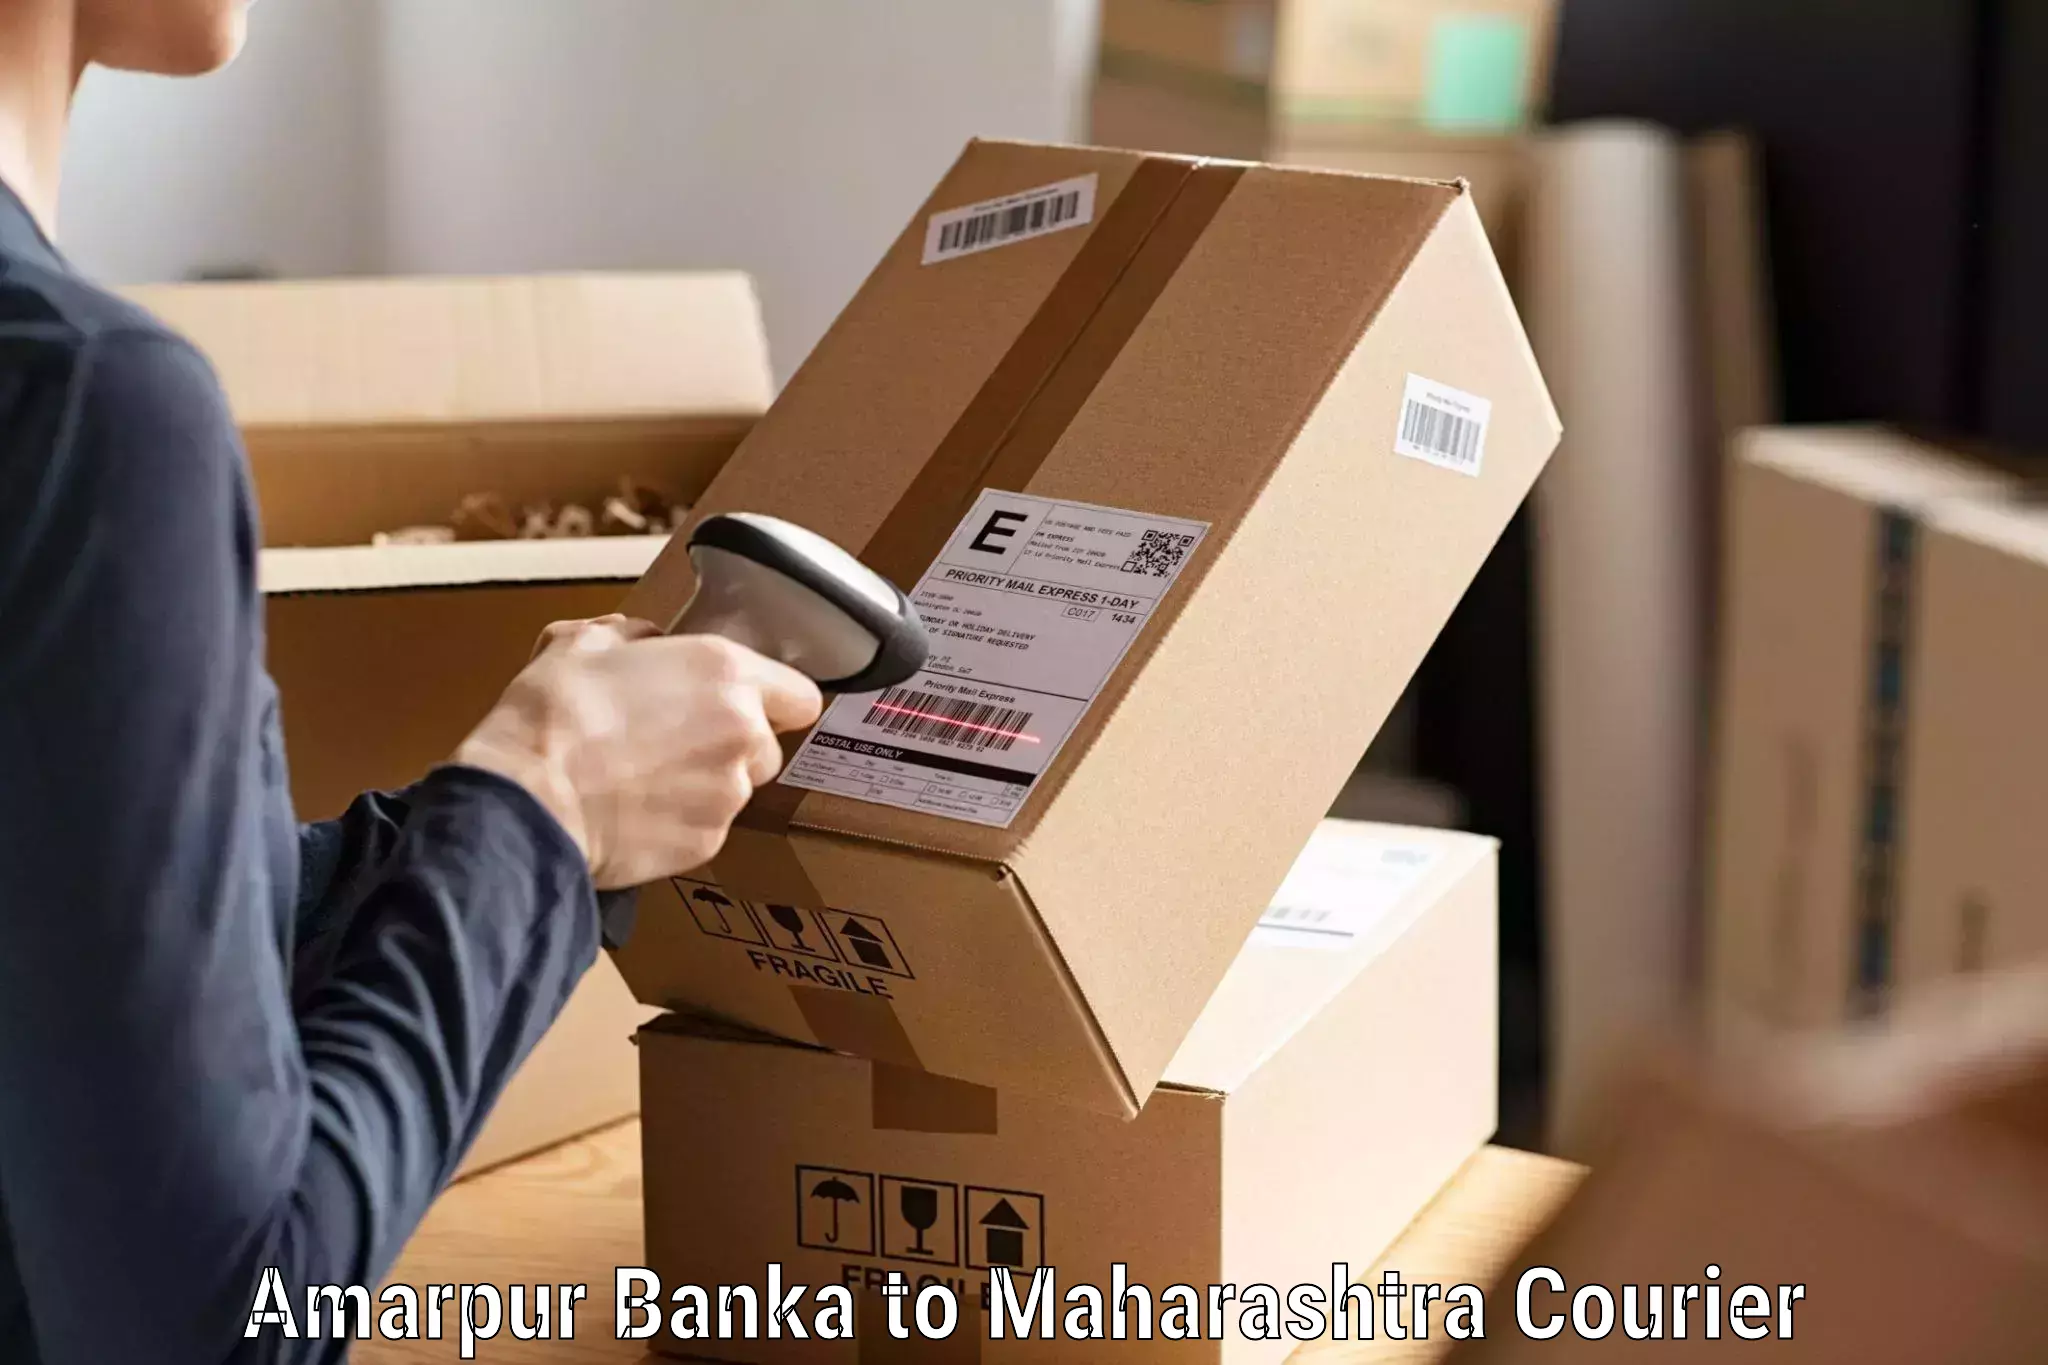 Fast delivery service Amarpur Banka to Mumbai Port